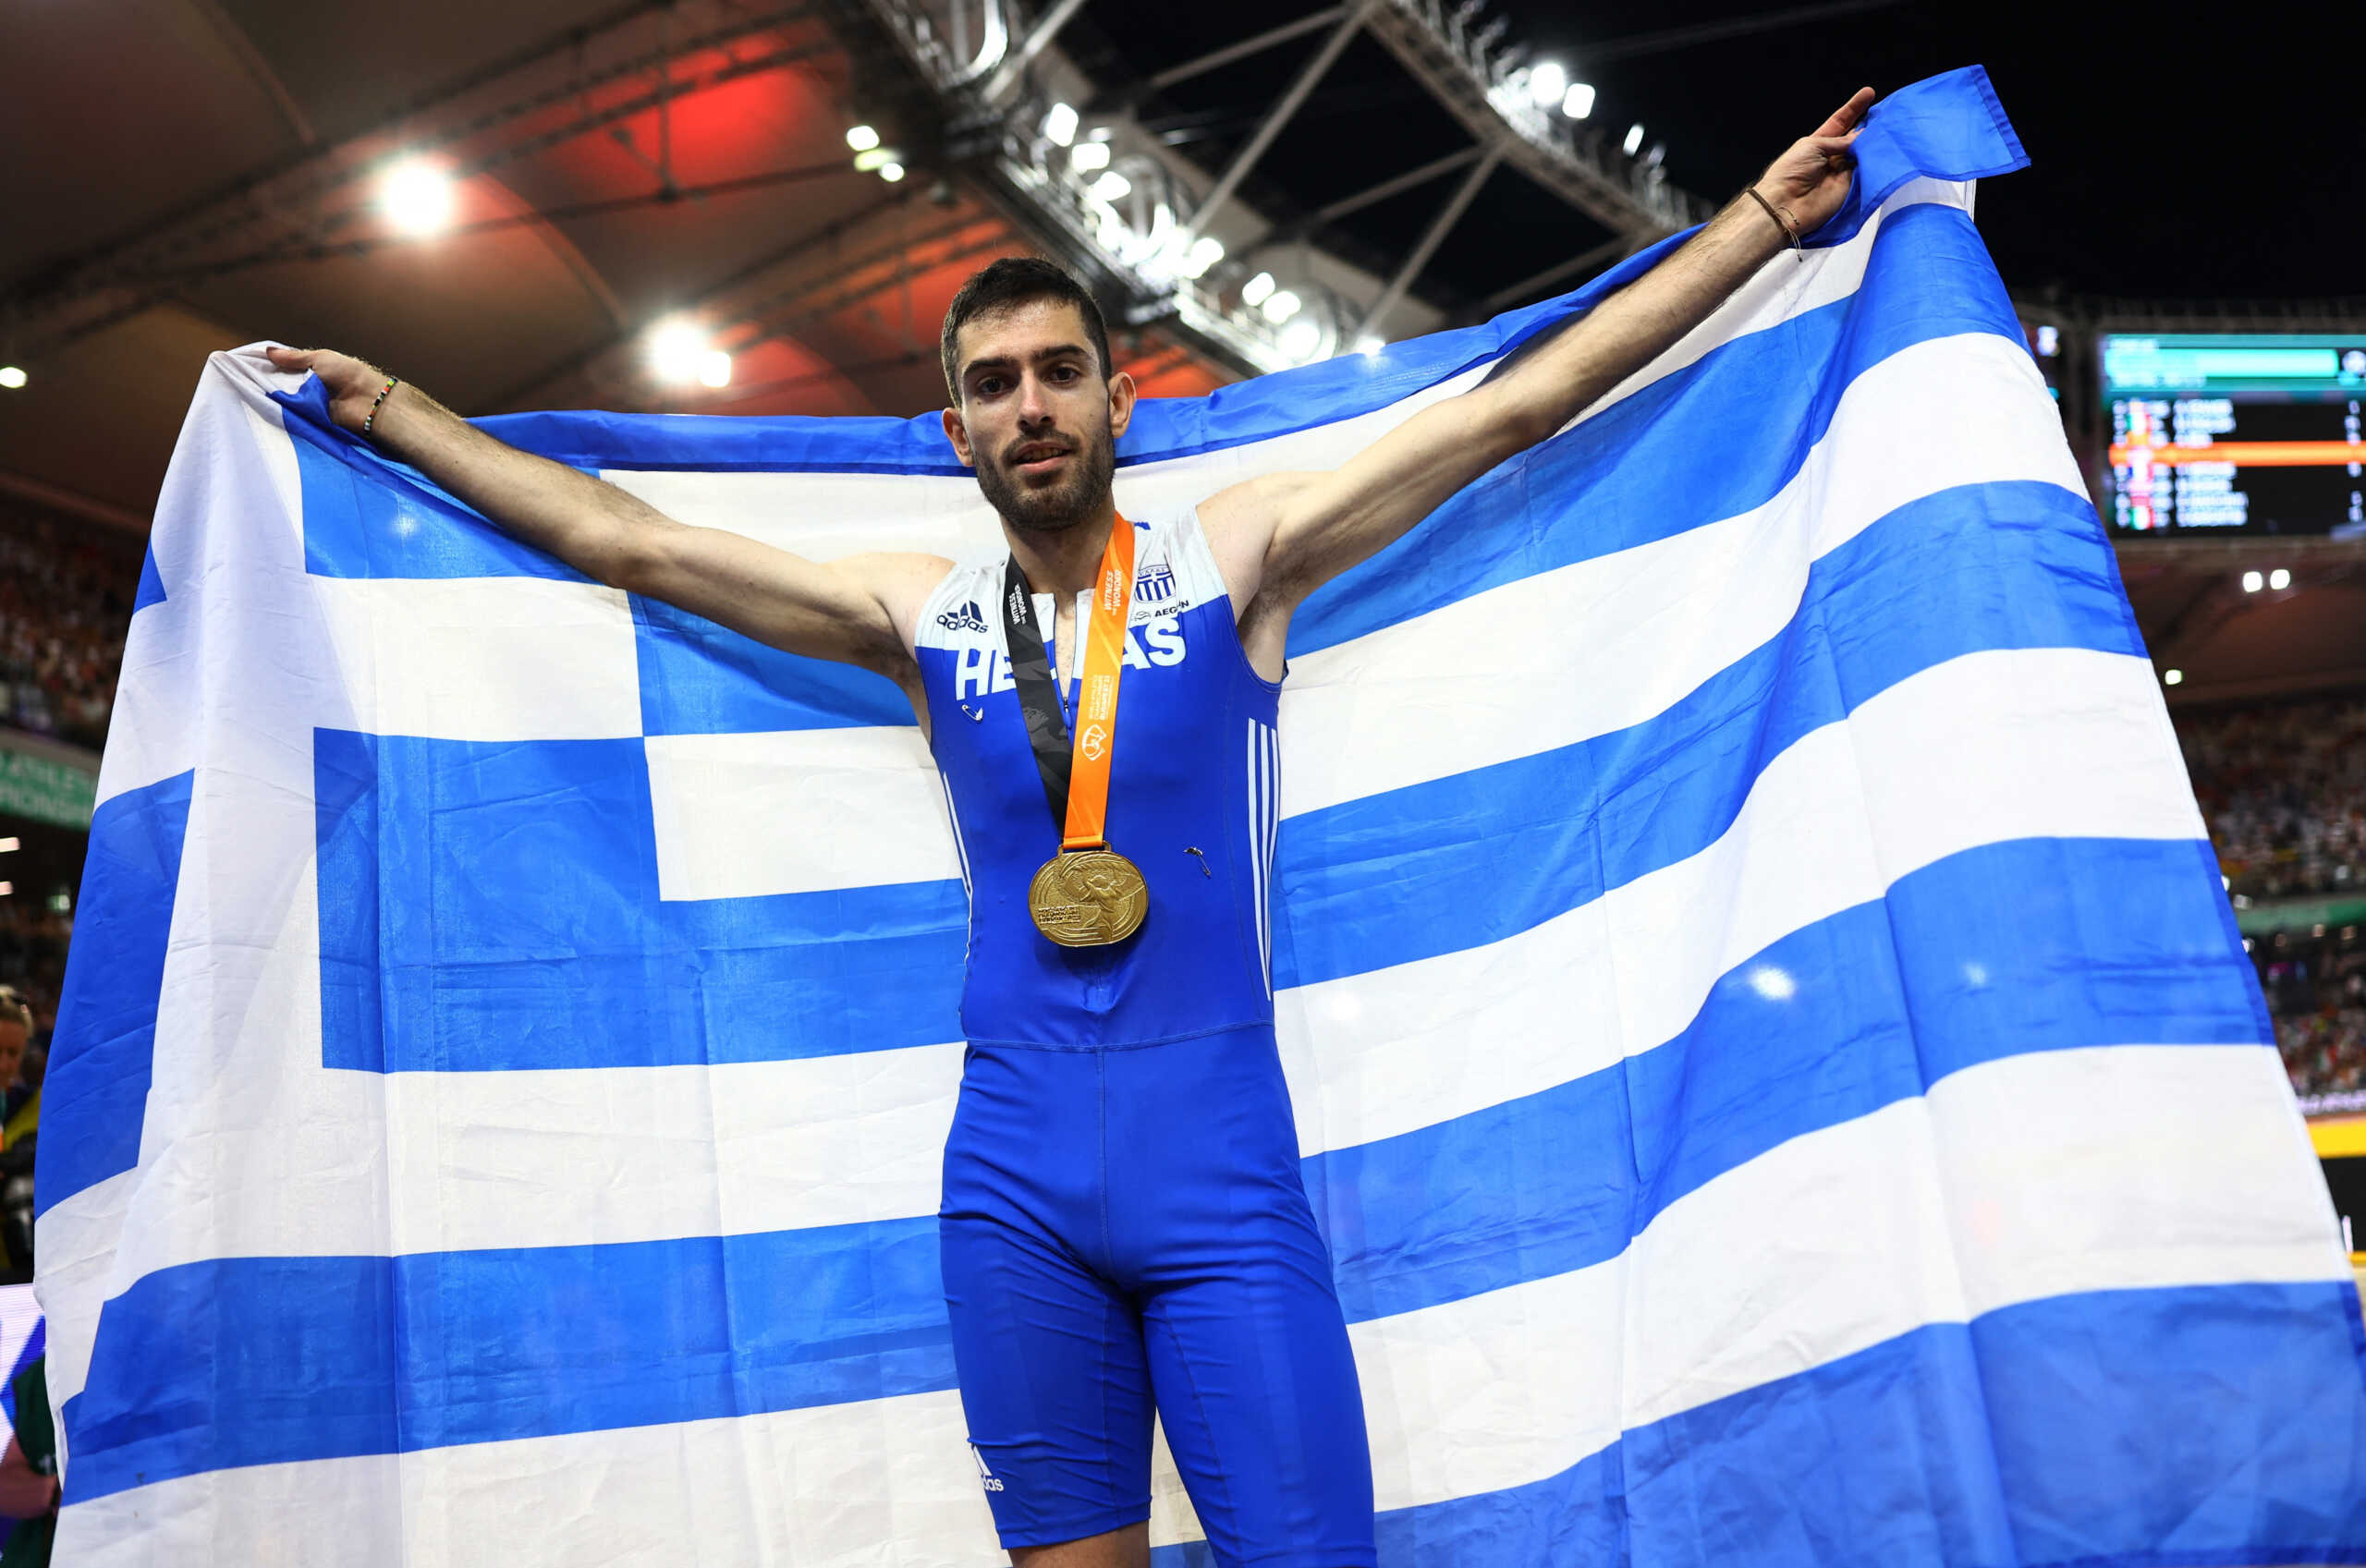 O Μίλτος Τεντόγλου επικεφαλής στη λίστα με τους πολυνίκες Έλληνες πρωταθλητές